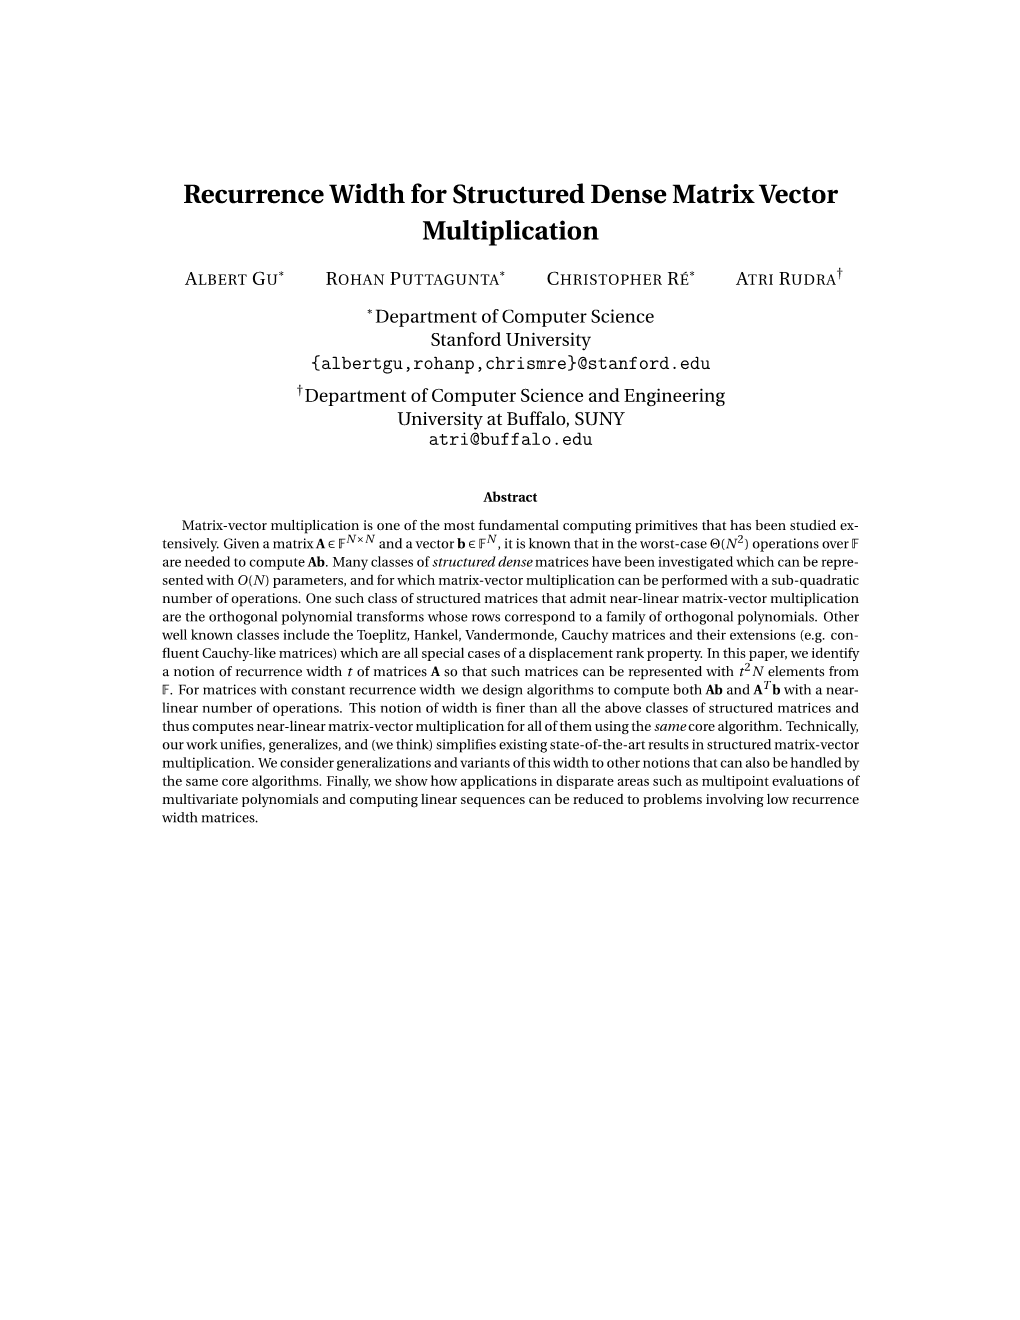 Recurrence Width for Structured Dense Matrix Vector Multiplication